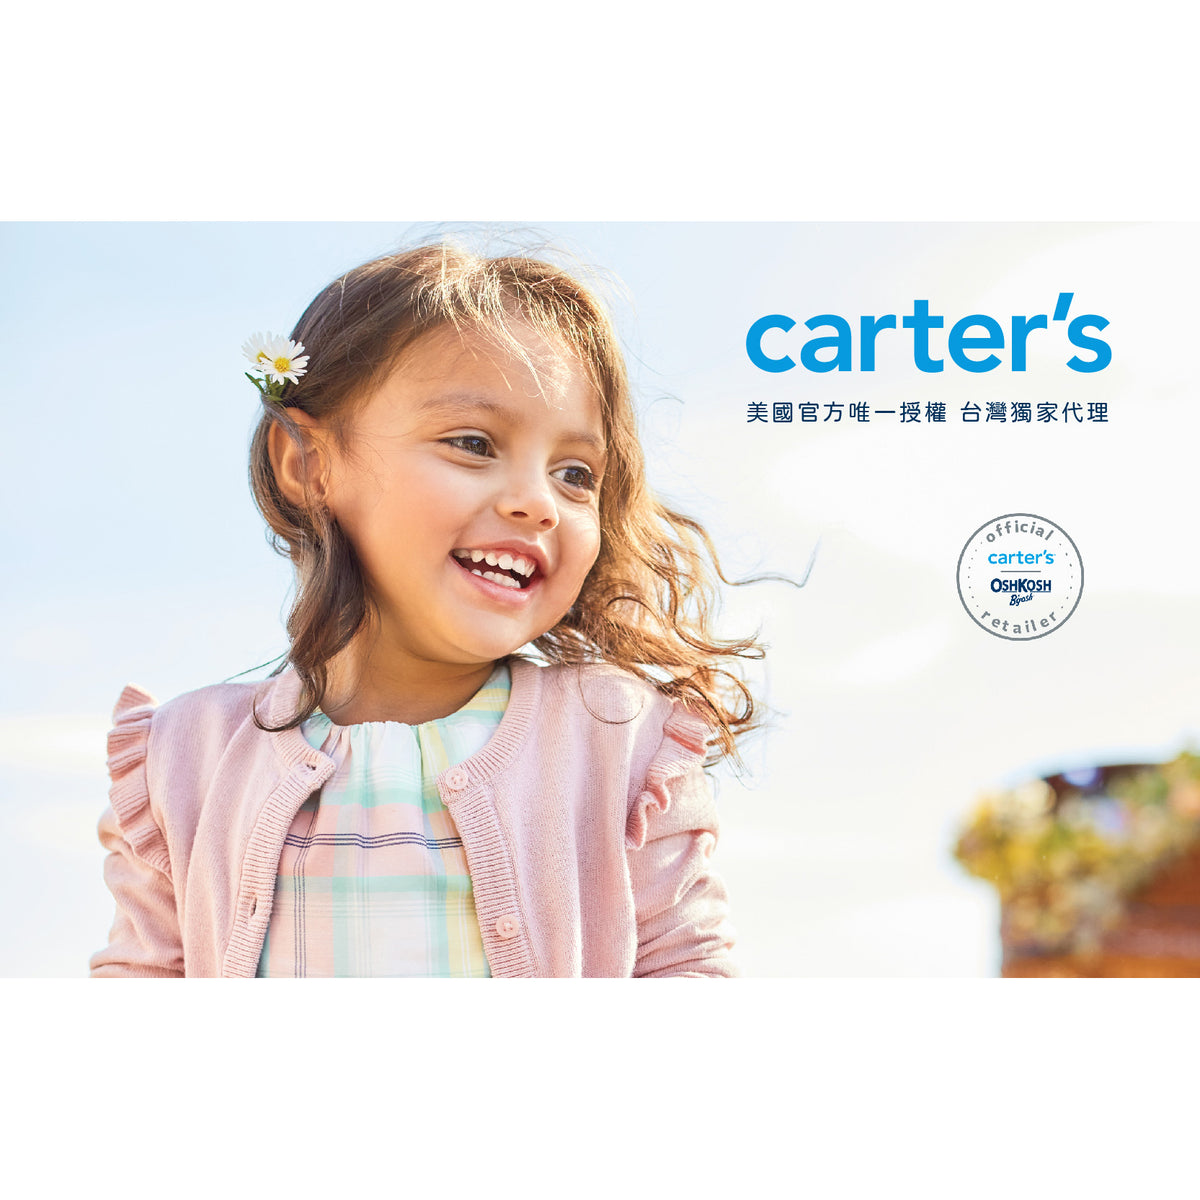 Carter's 天空藍碎花風2件組套裝(3T-5T)